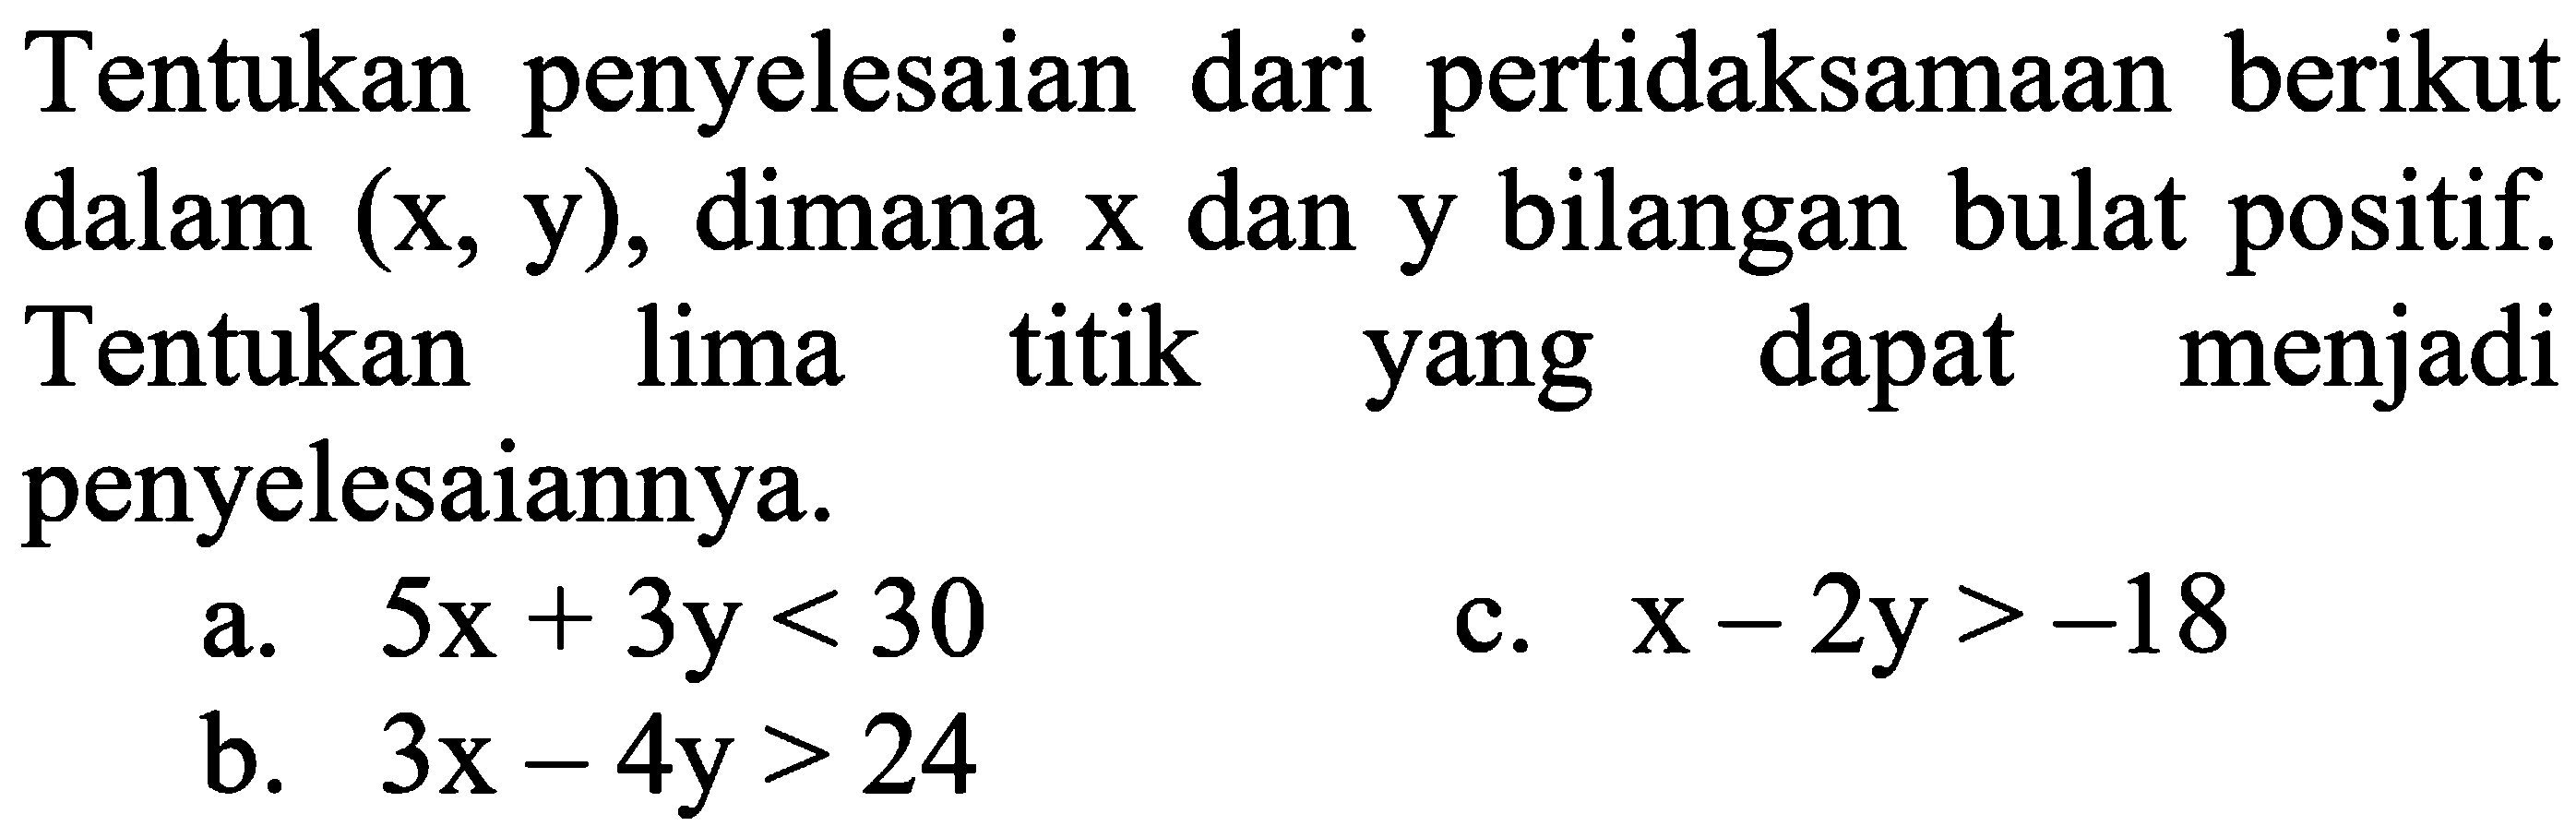 Tentukan penyelesaian dari pertidaksamaan berikut dalam (x,y), dimana x dan y bilangan bulat positif. Tentukan lima titik yang dapat menjadi penyelesaiannya. a. 5x + 3y <30 c. x - 2y > -18 b. 3x - 4y > 24